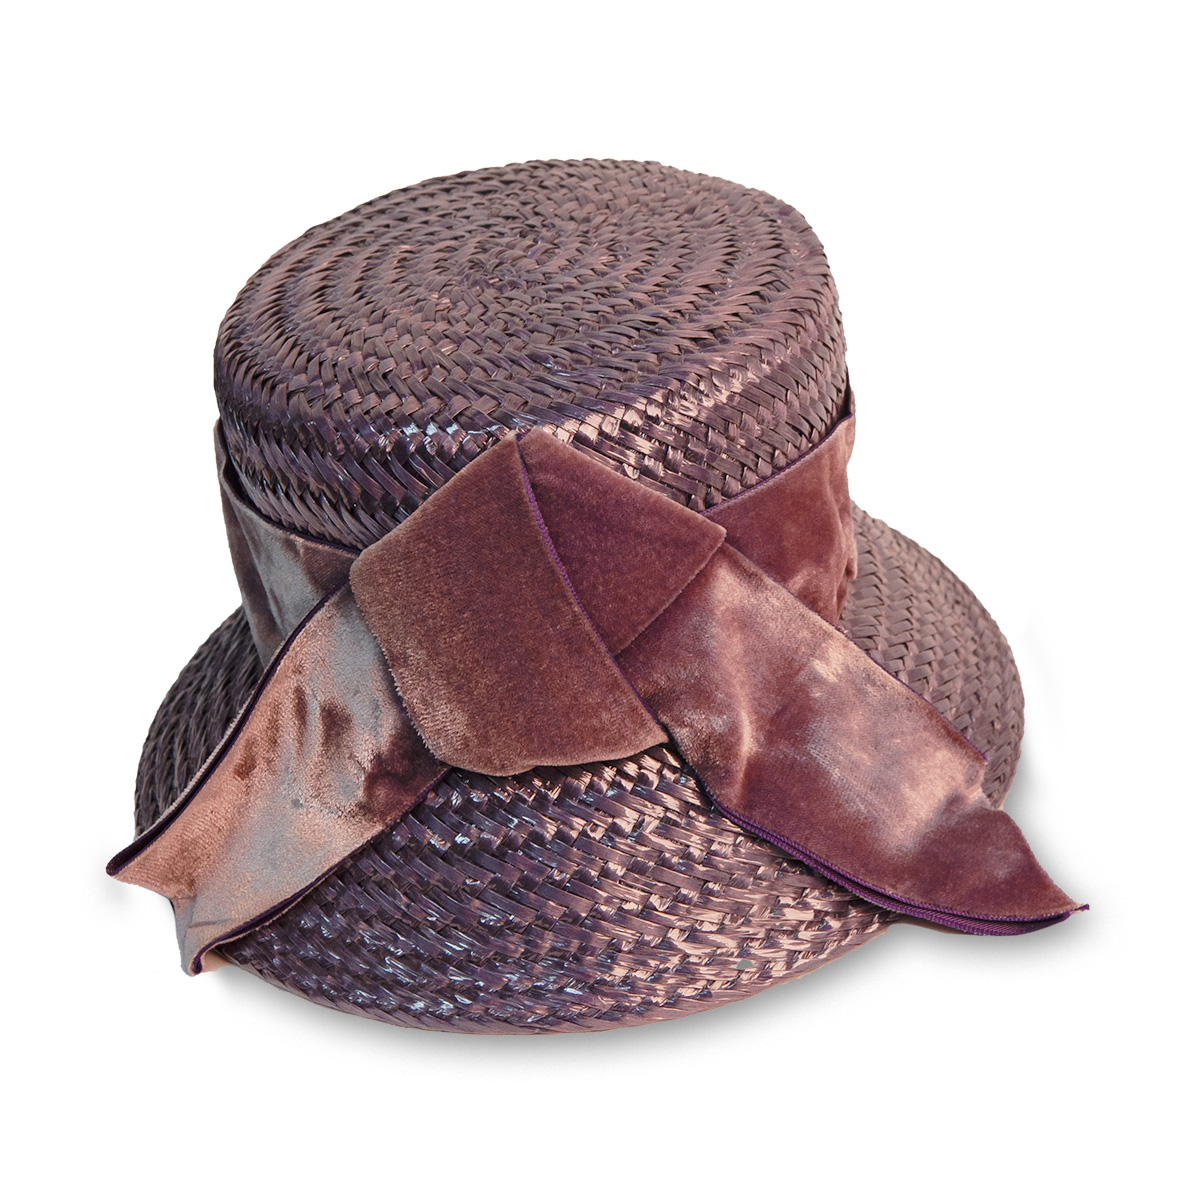 Leslie James Purple Straw hat